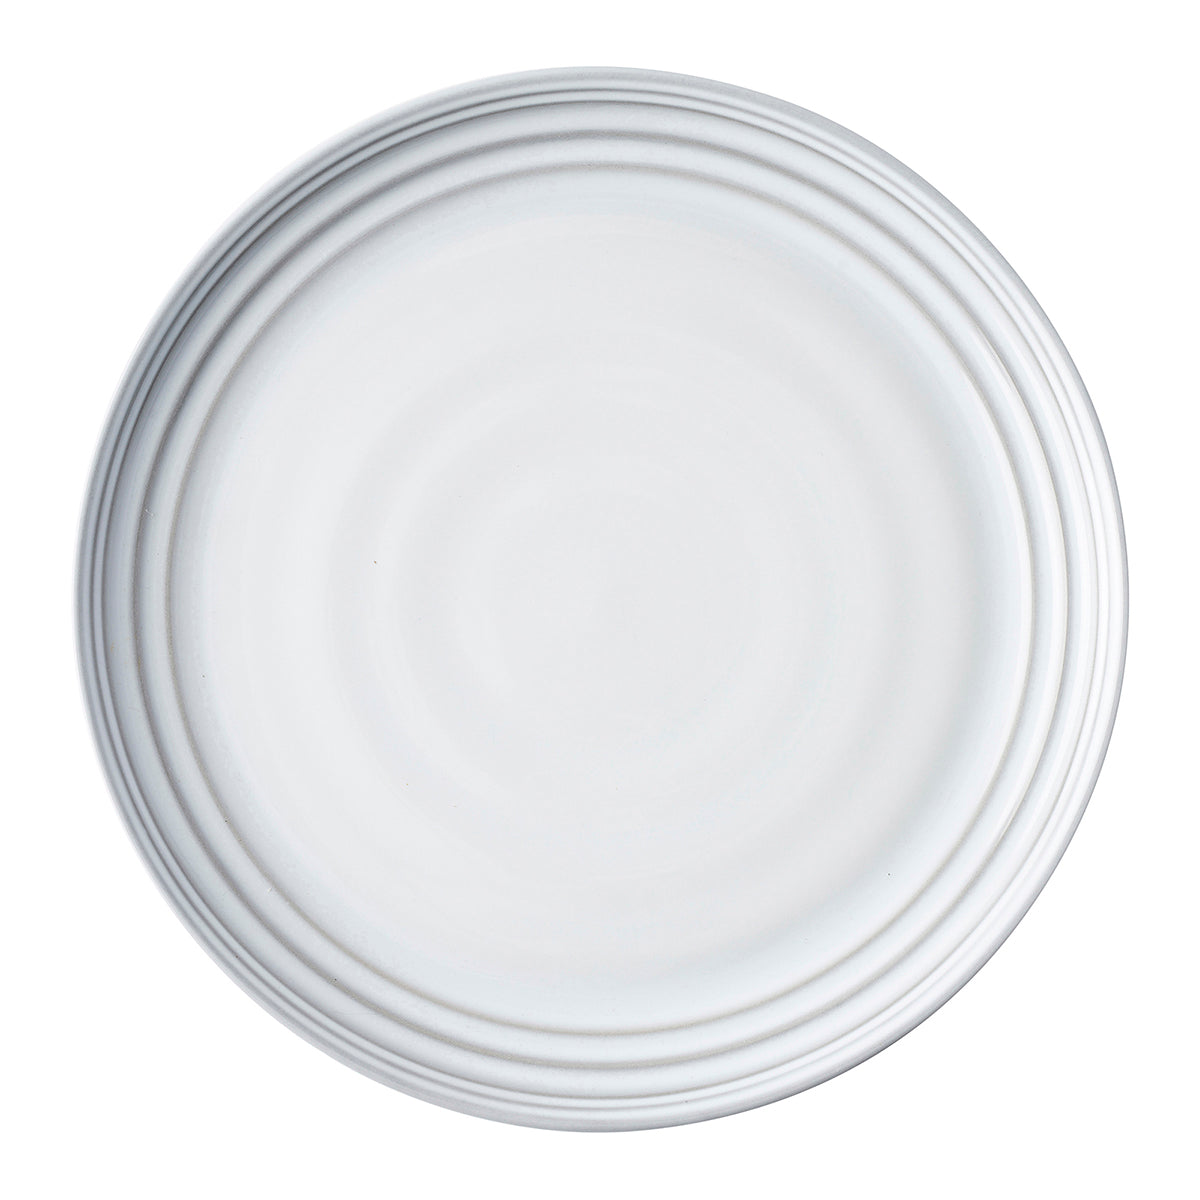 Bilbao White Truffle Dinner Plate Set-4-2nd